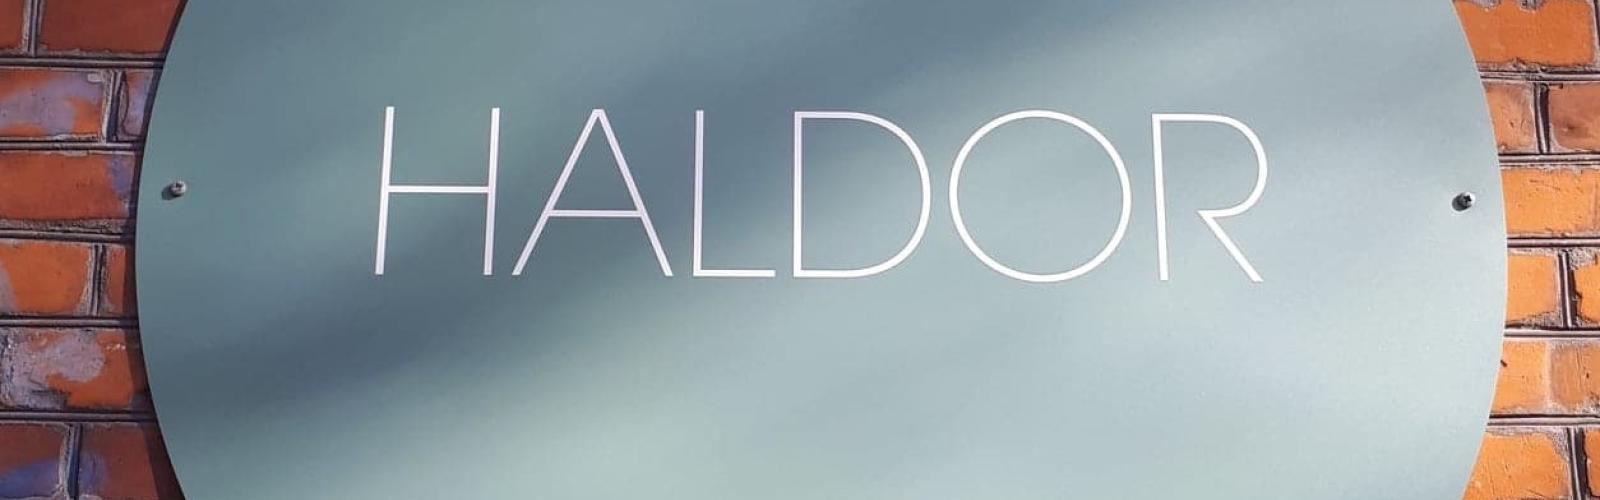 Haldor logo